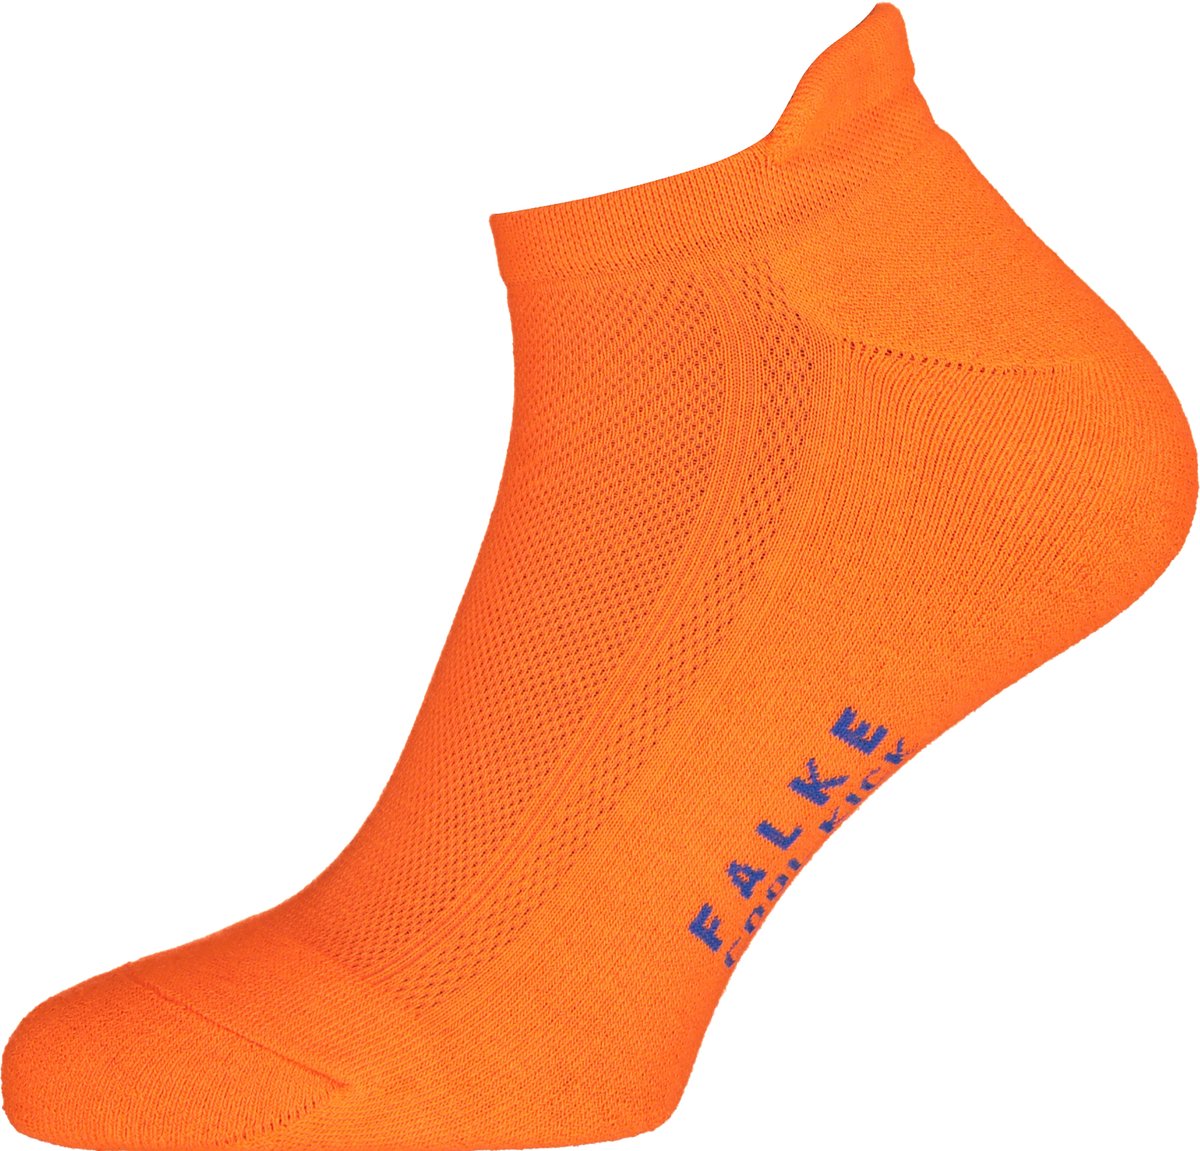 FALKE Cool Kick unisex enkelsokken - oranje (flash orange) - Maat: 44-45 |  bol.com